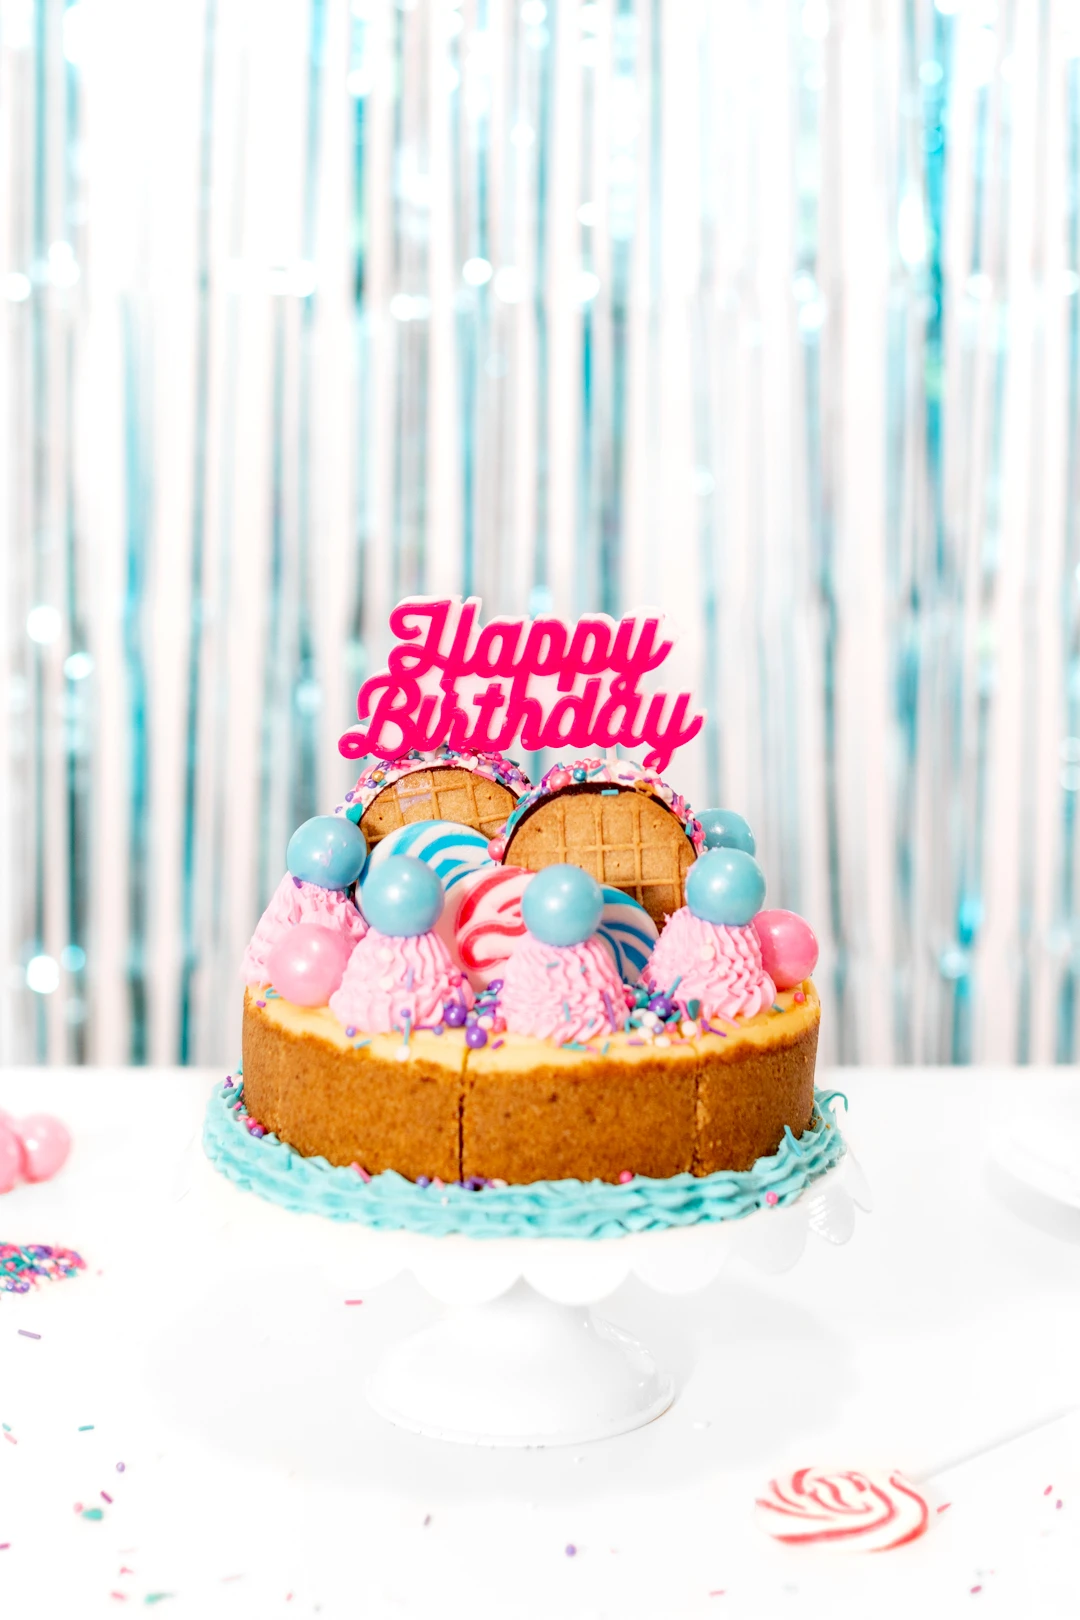 Copycat Celebration Cheesecake Recipe: How to Make It